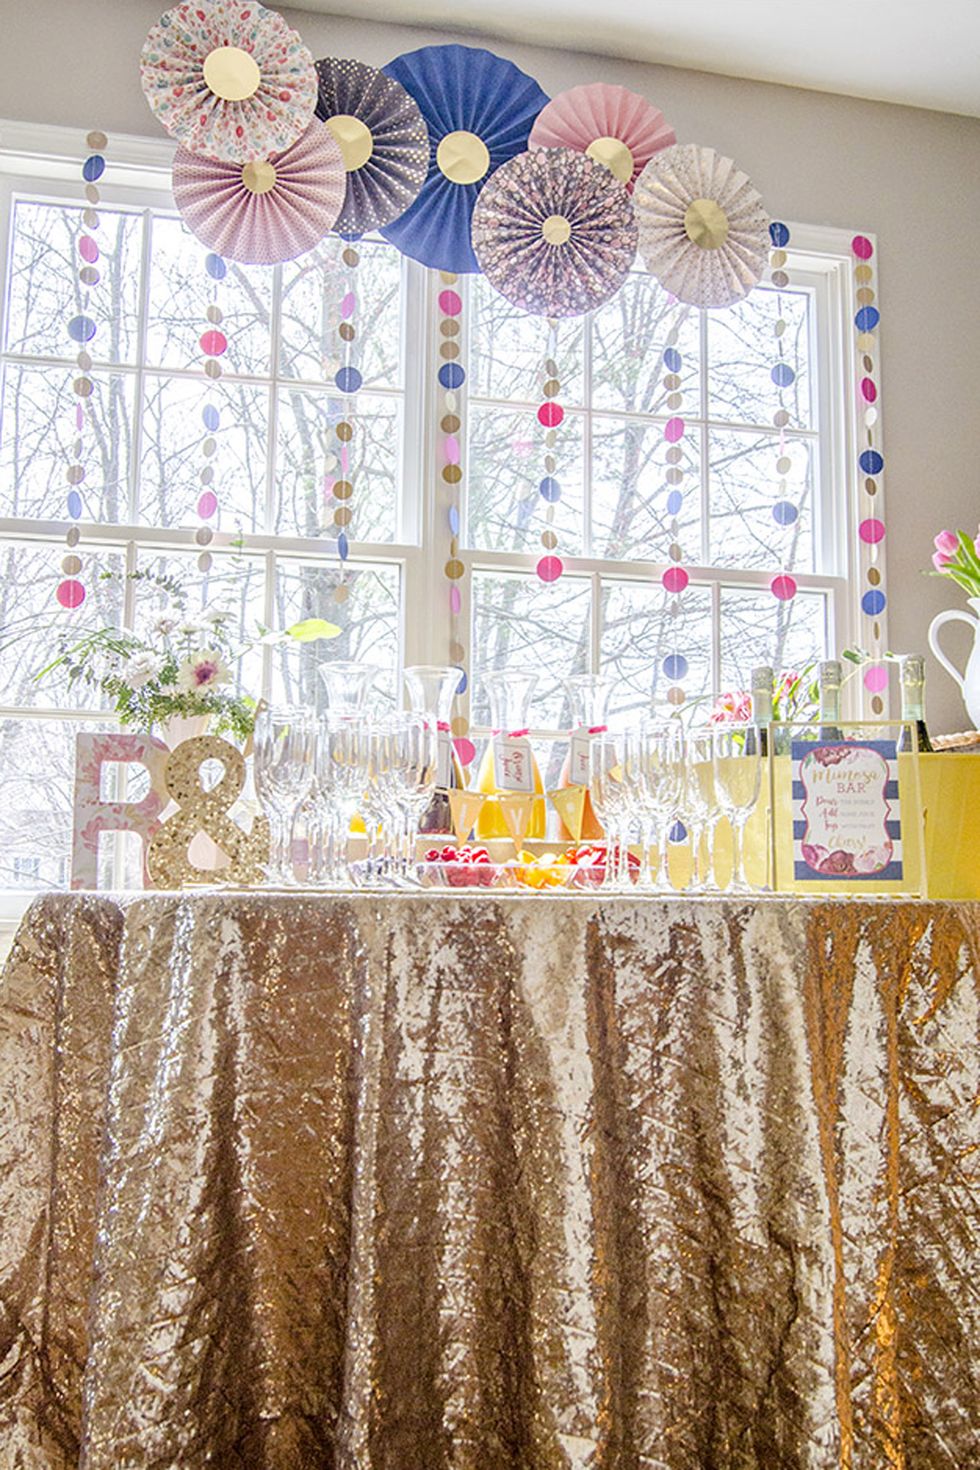 Bridal Shower Mimosa Bar Ideas: 25 Fun Options